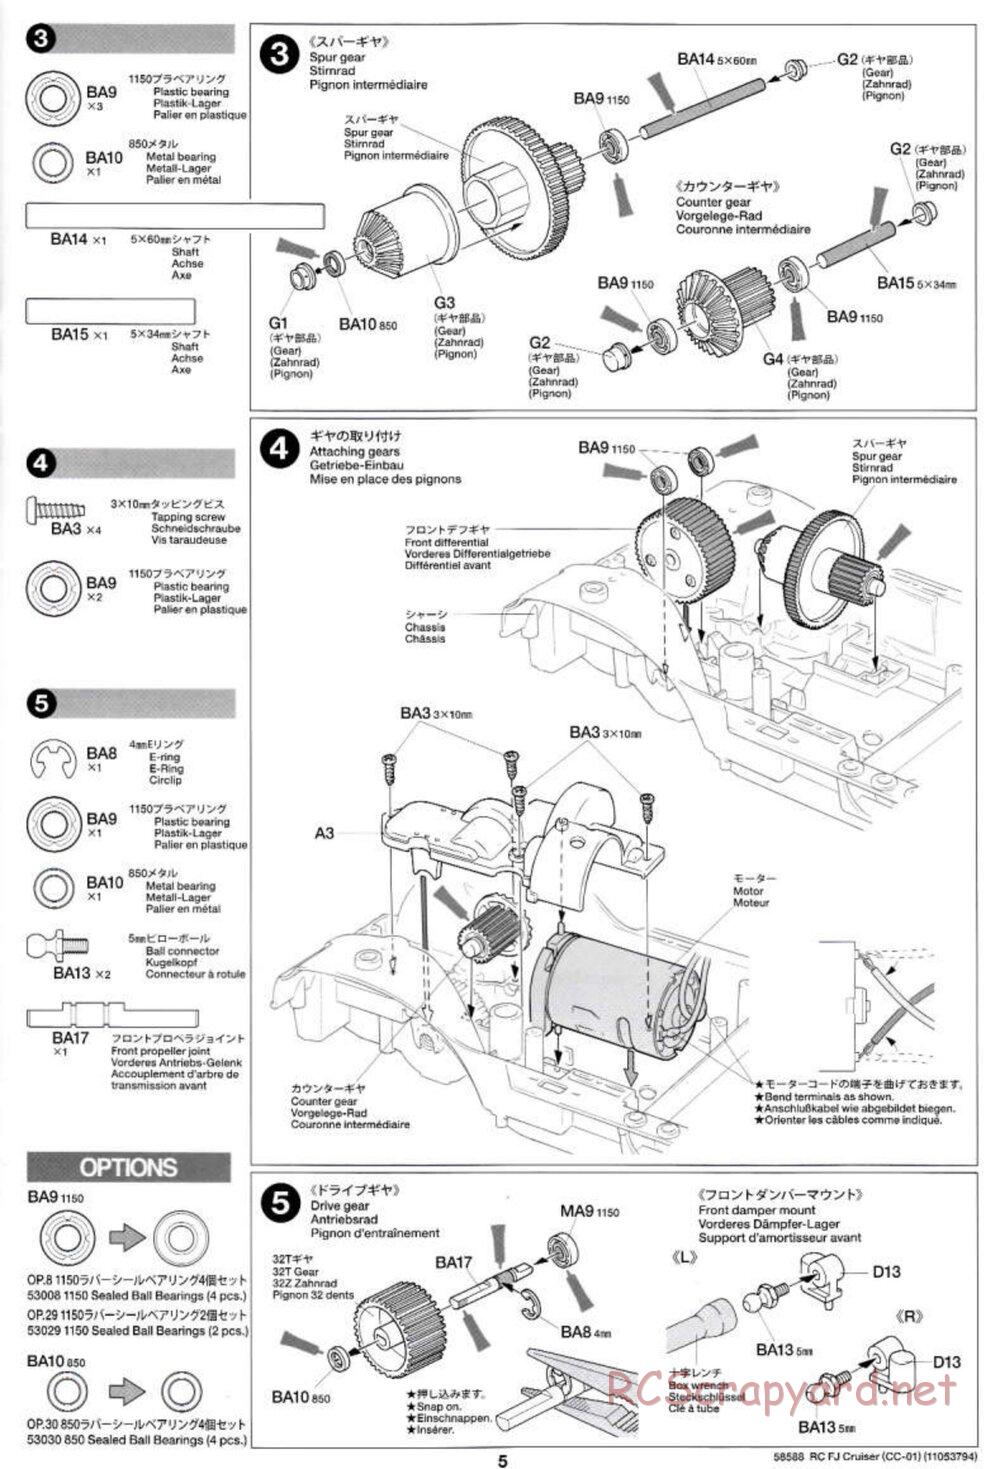 Tamiya - Toyota FJ Cruiser - CC-01 Chassis - Manual - Page 5